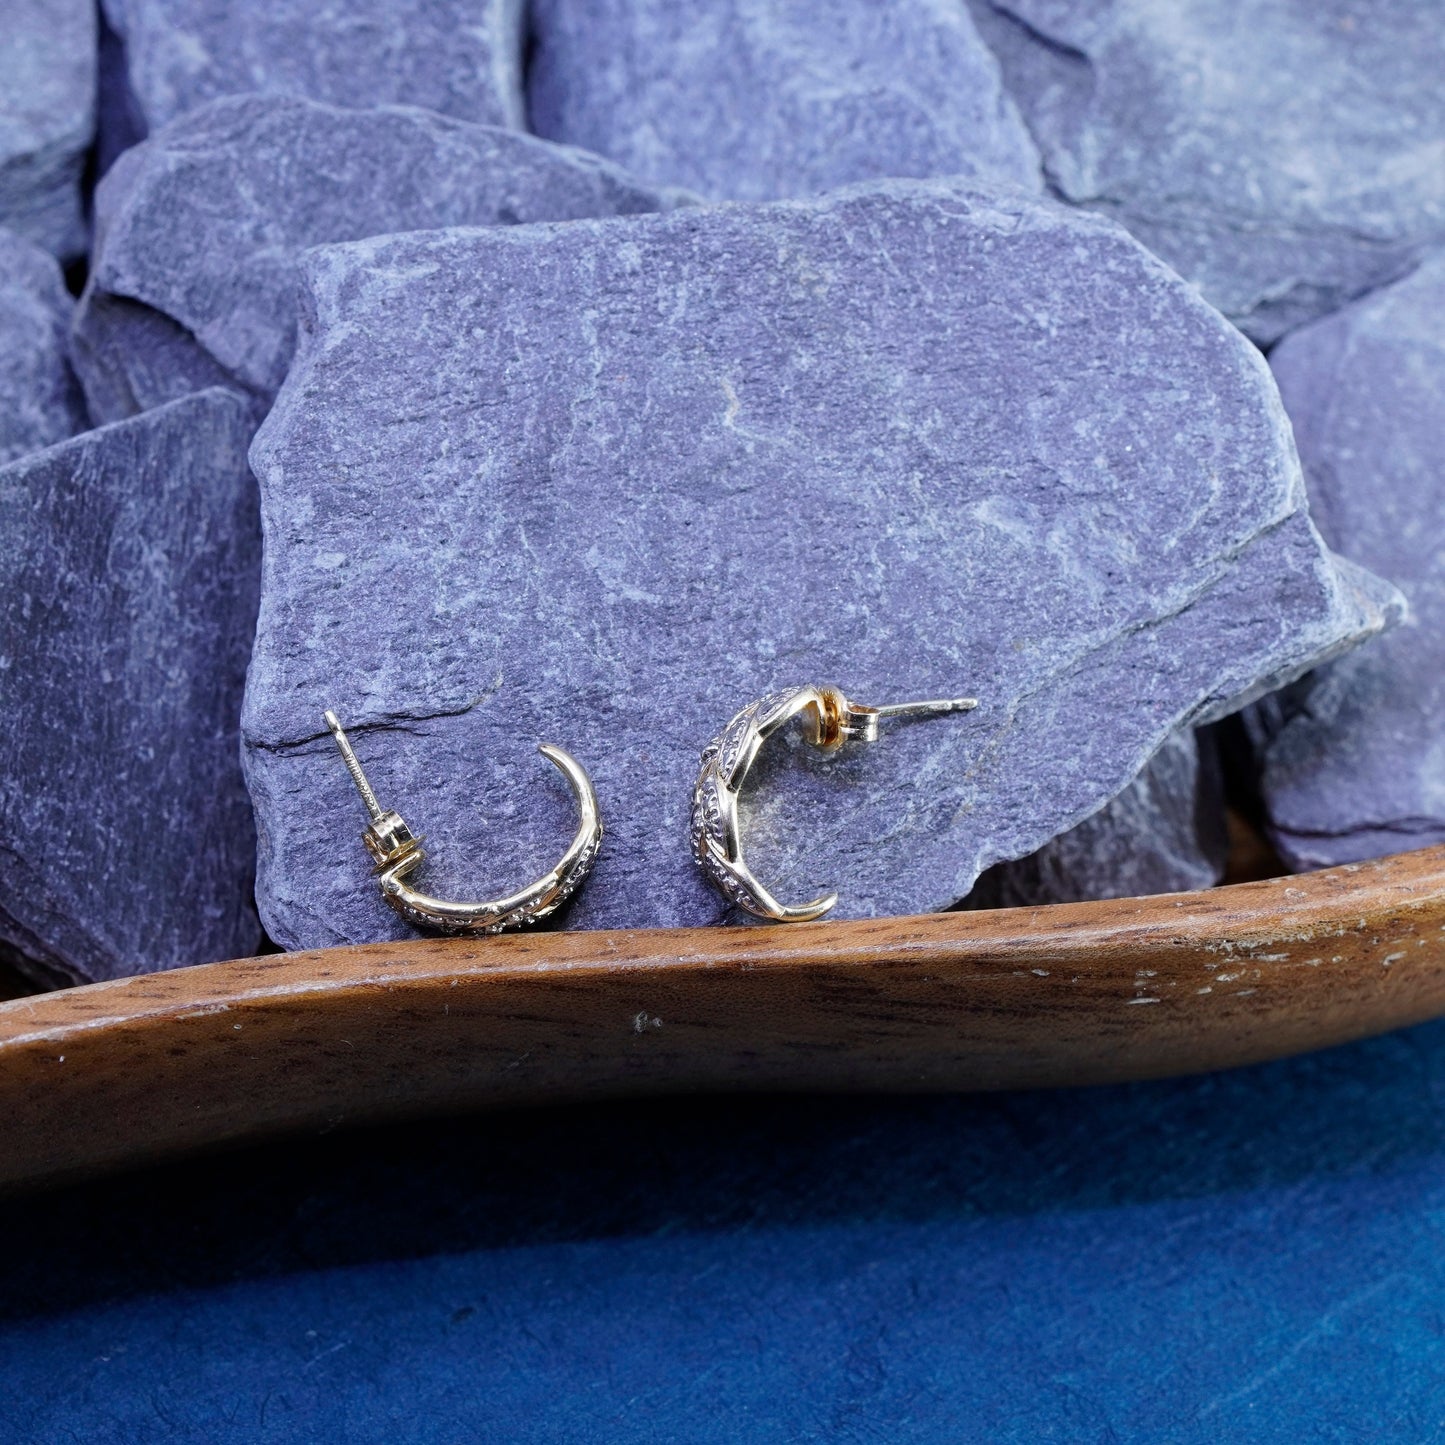 0.5”, Vermeil gold over Sterling 925 silver earrings, hoops, huggie w/ diamond